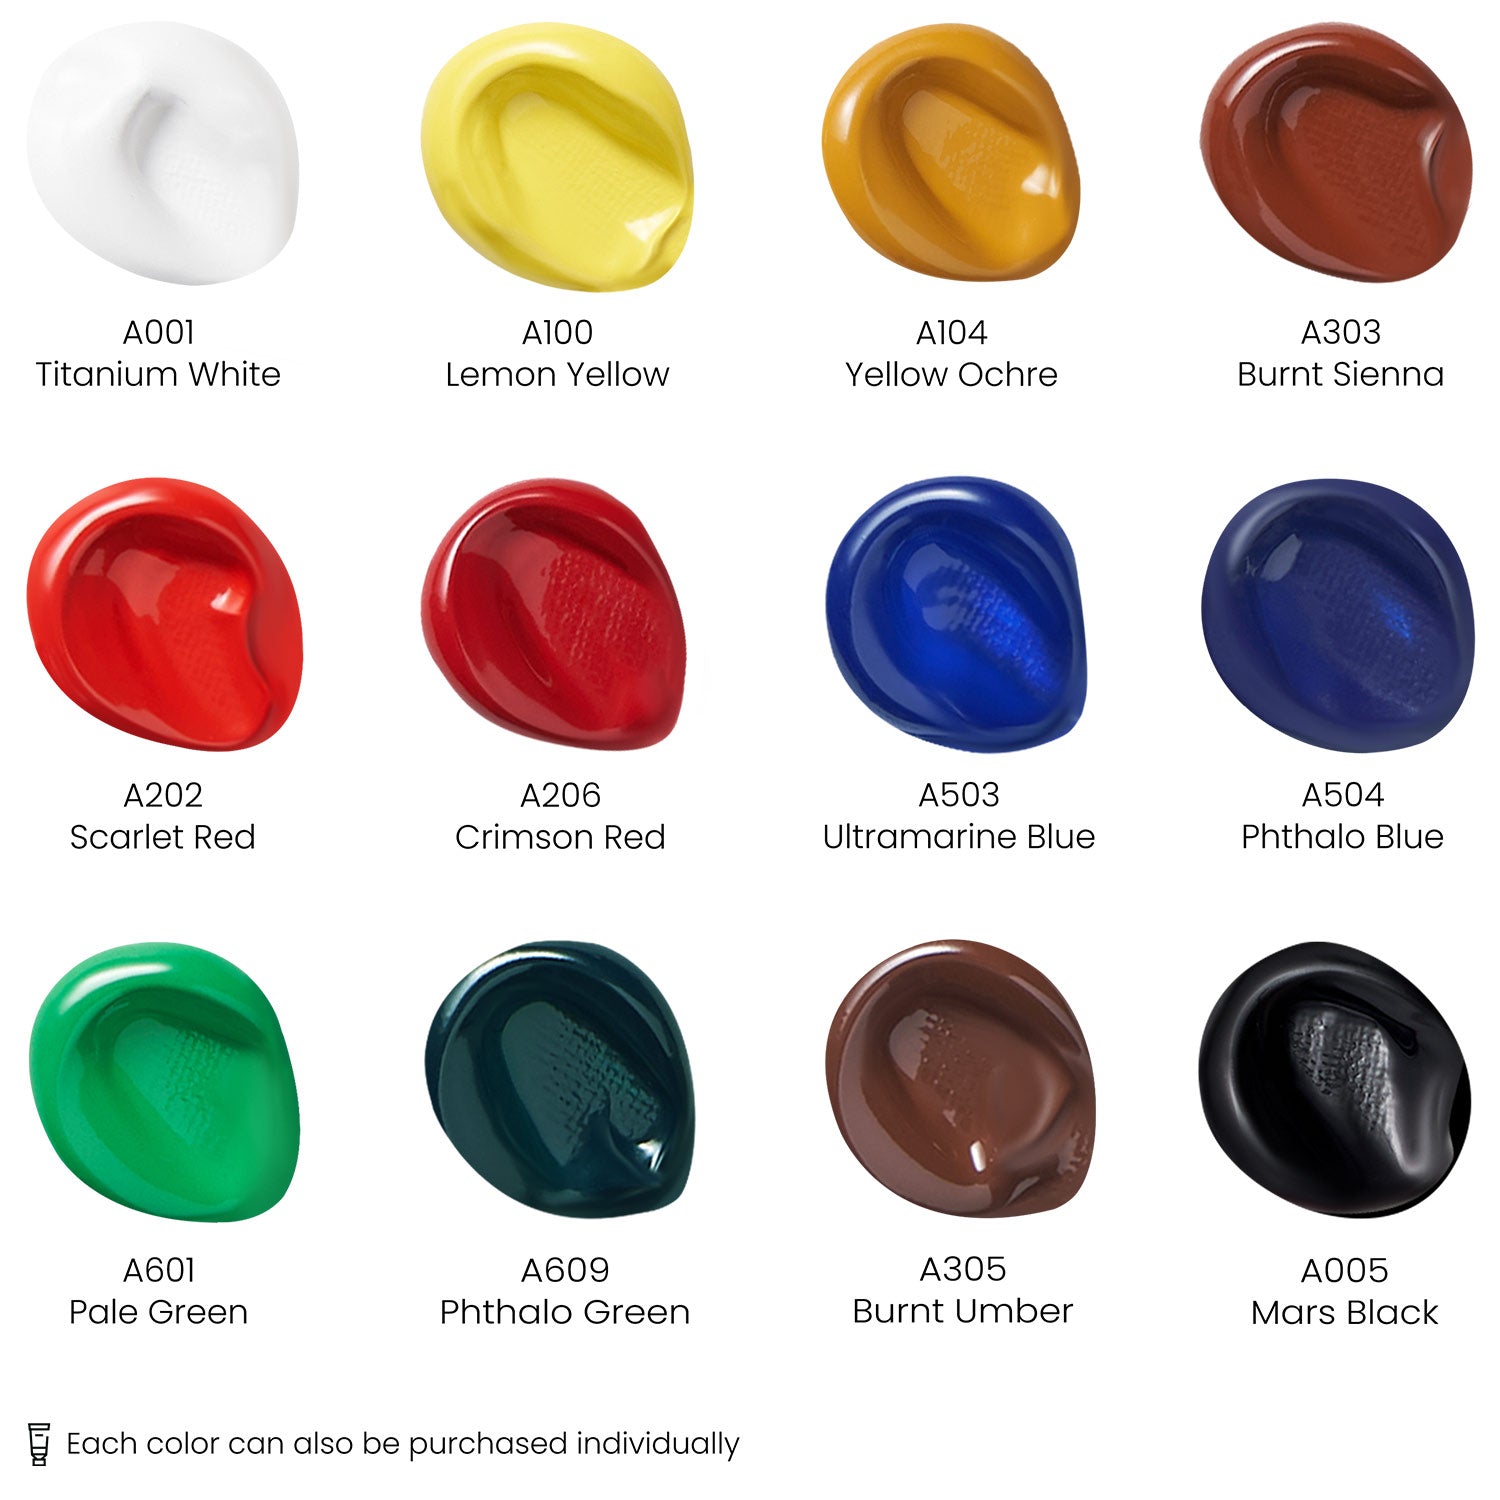 ARTEZA Acrylic Paint Set of 60 Colors/Tubes 22 ml 0.74 oz. with Storage Box  